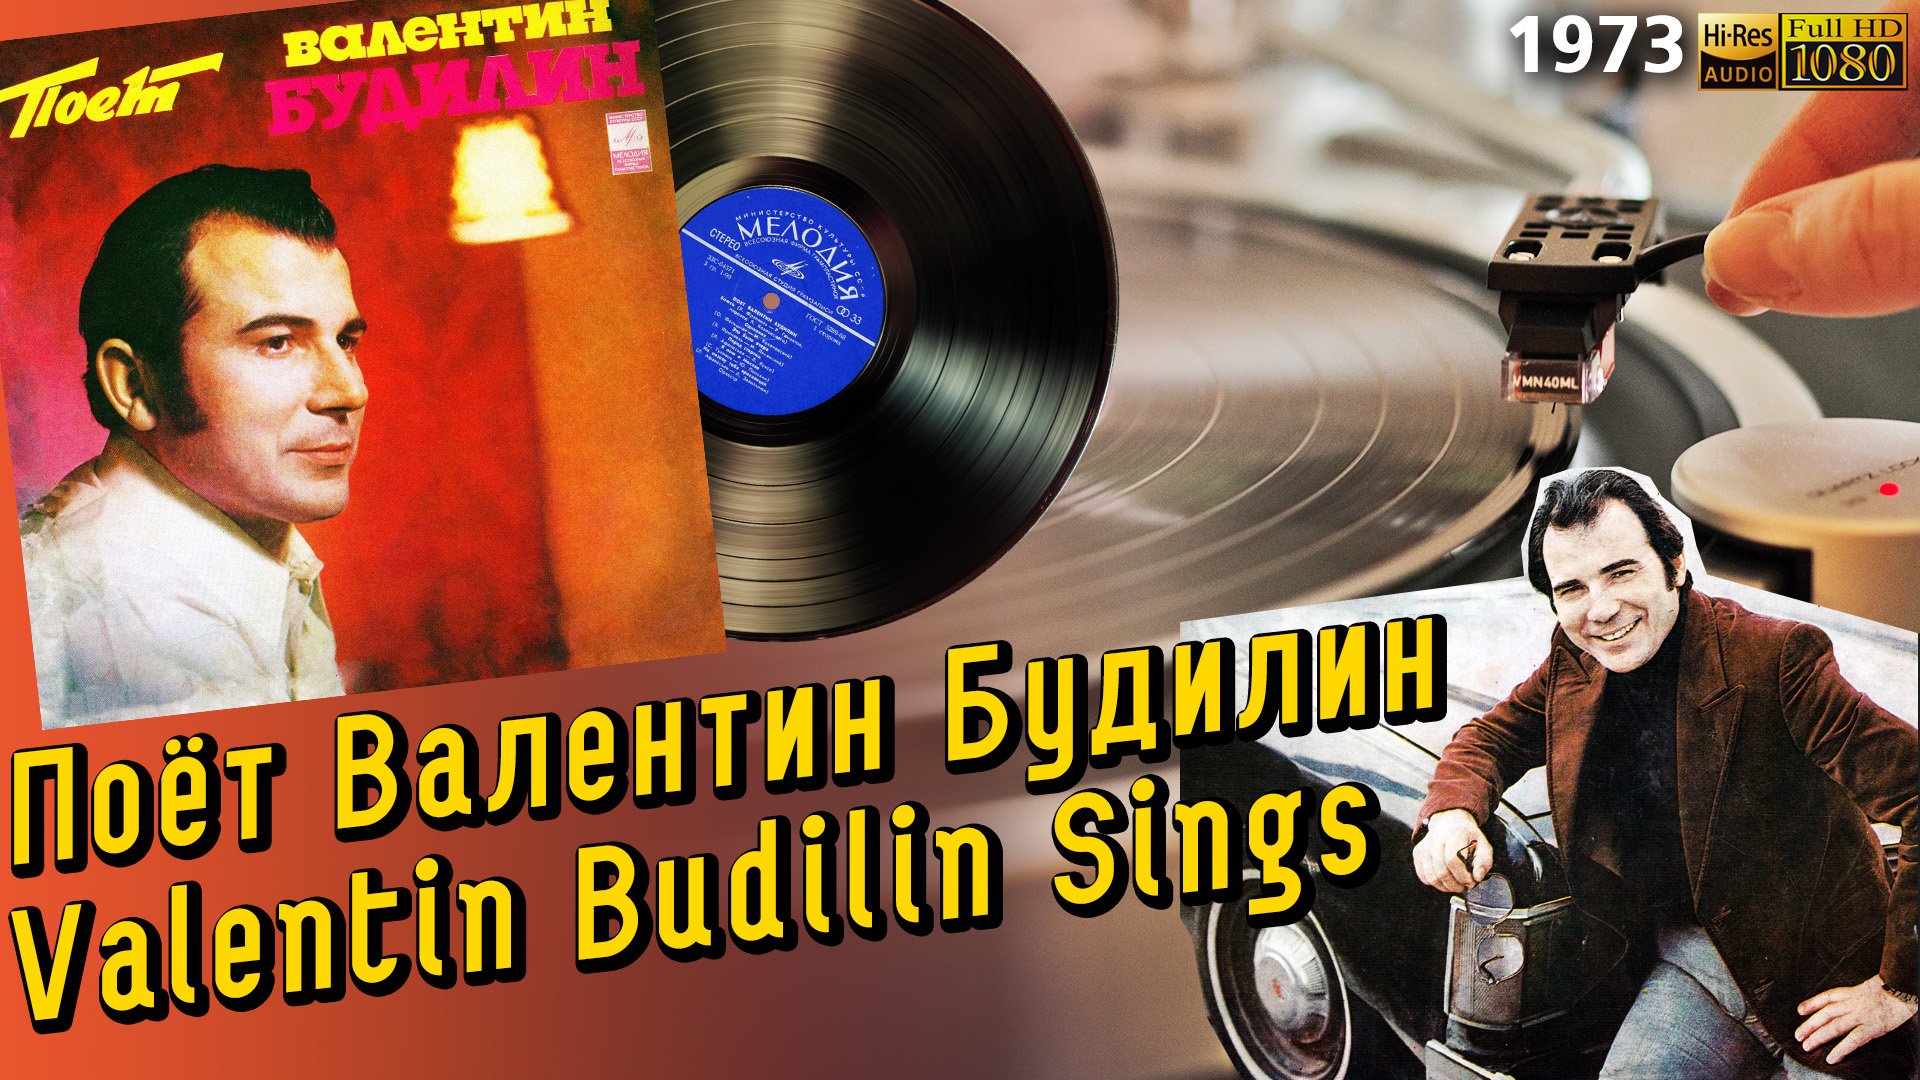 Поёт Валентин Будилин / Valentin Budilin Sings, 1973 Soviet pop, beat, variety